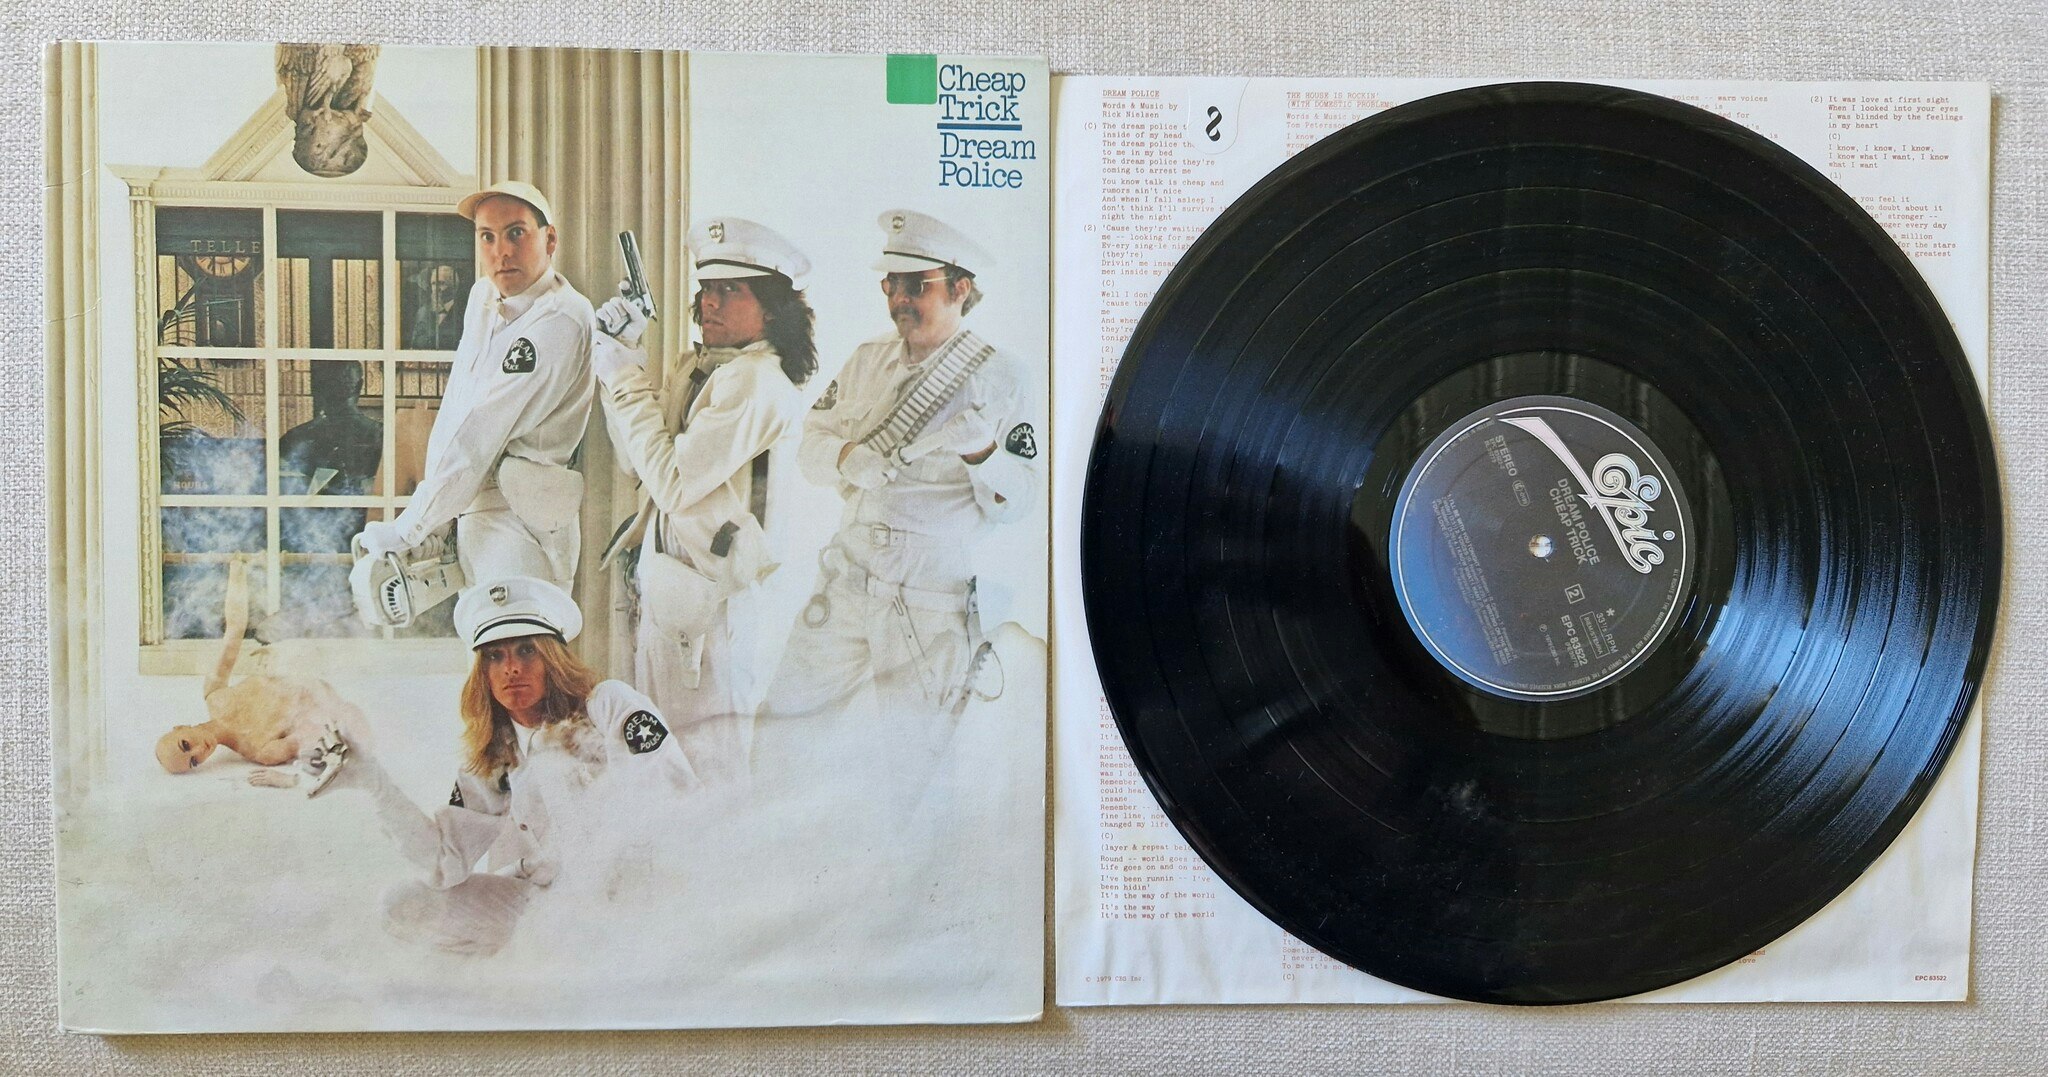 Cheap Trick, Dream police. Vinyl LP